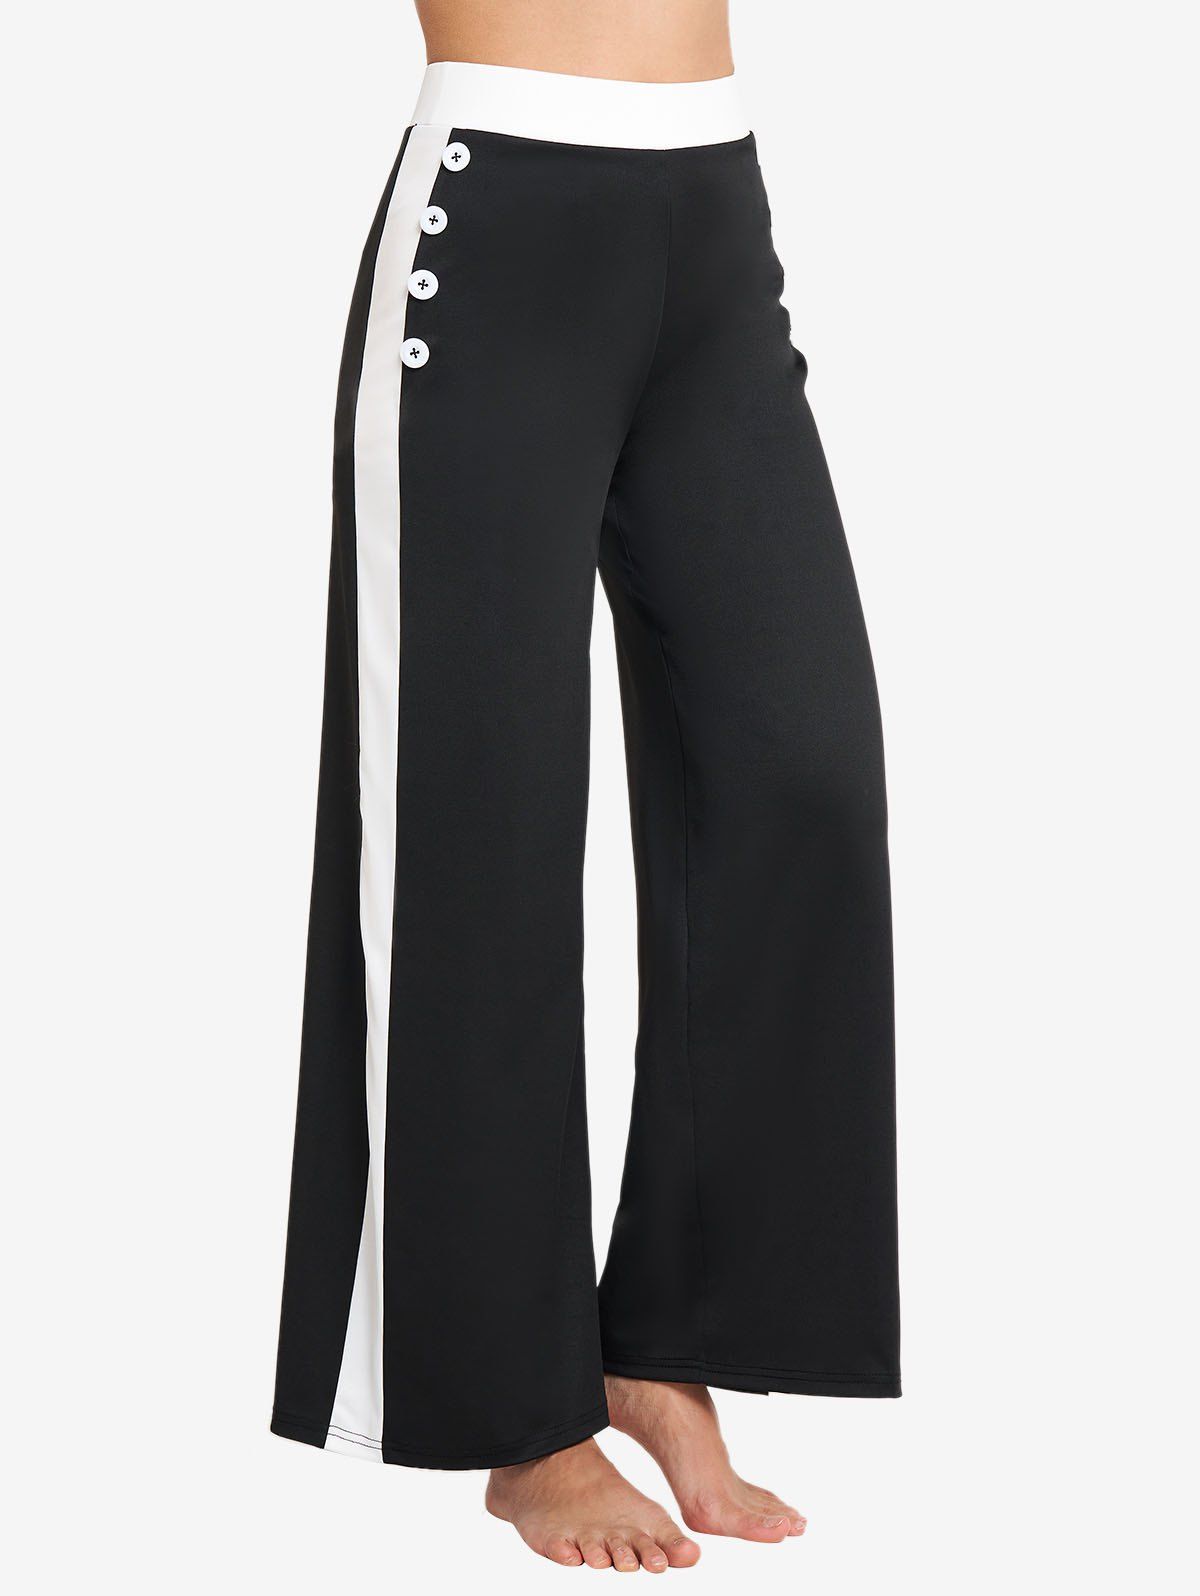 Contrast Striped Pants Mock Button Elastic High Waisted Long Pants - BLACK L